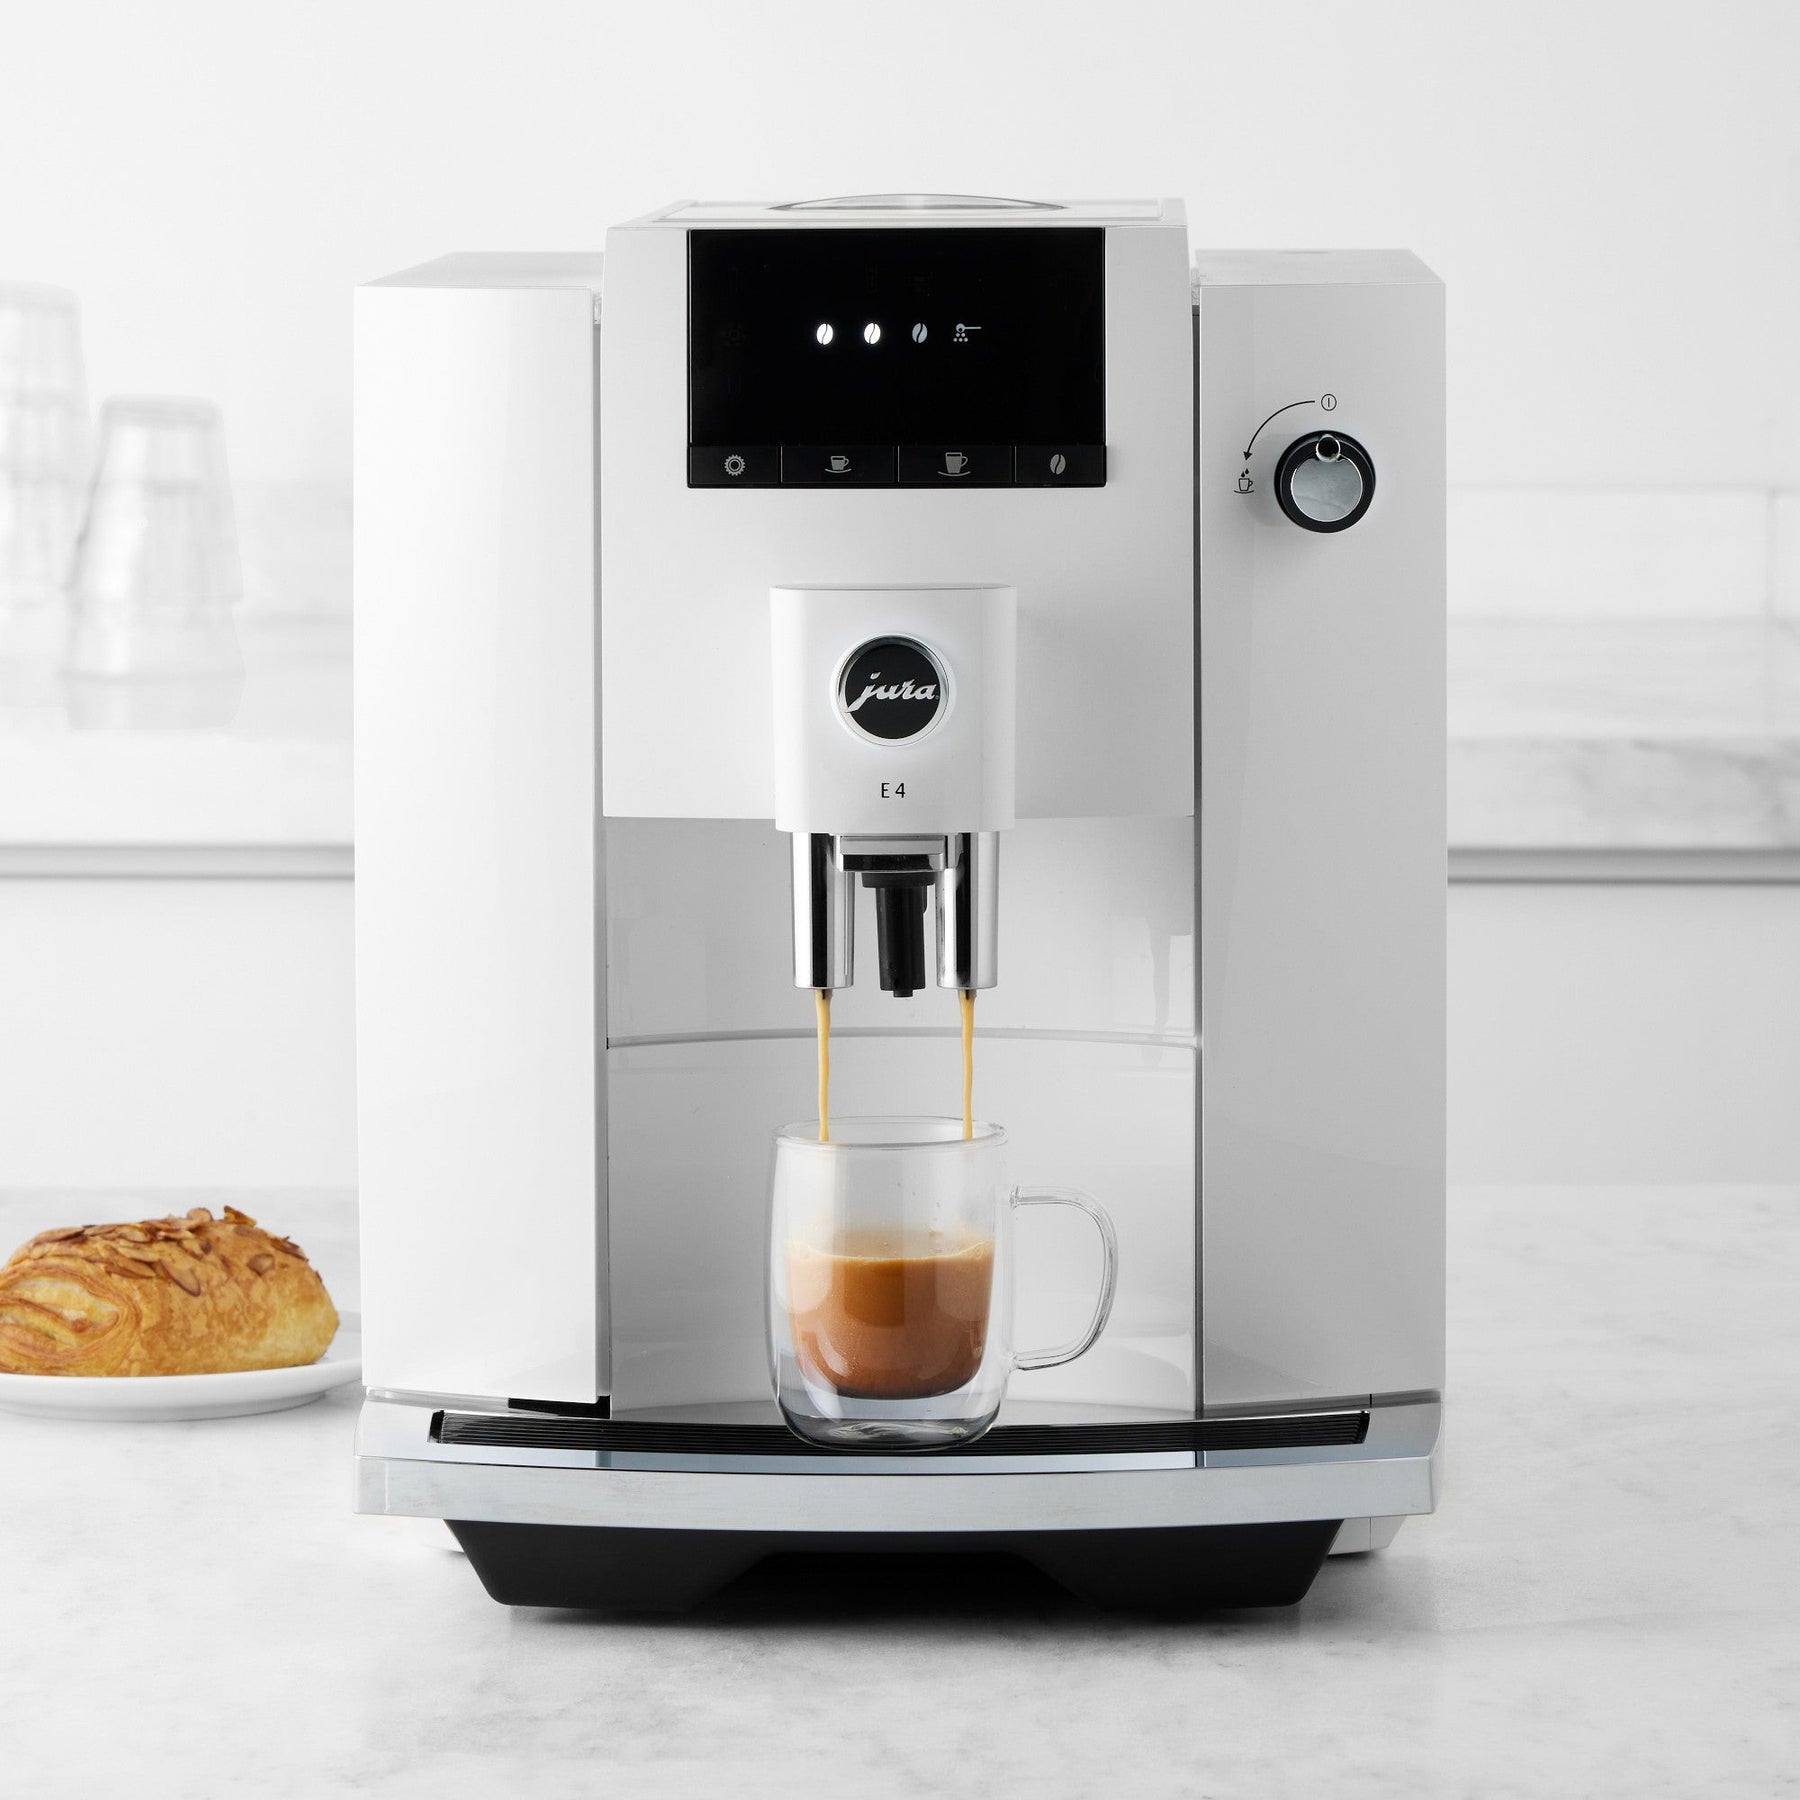 E4 Tarzianwestforhousewares Machine Fully – JURA Automatic Espresso